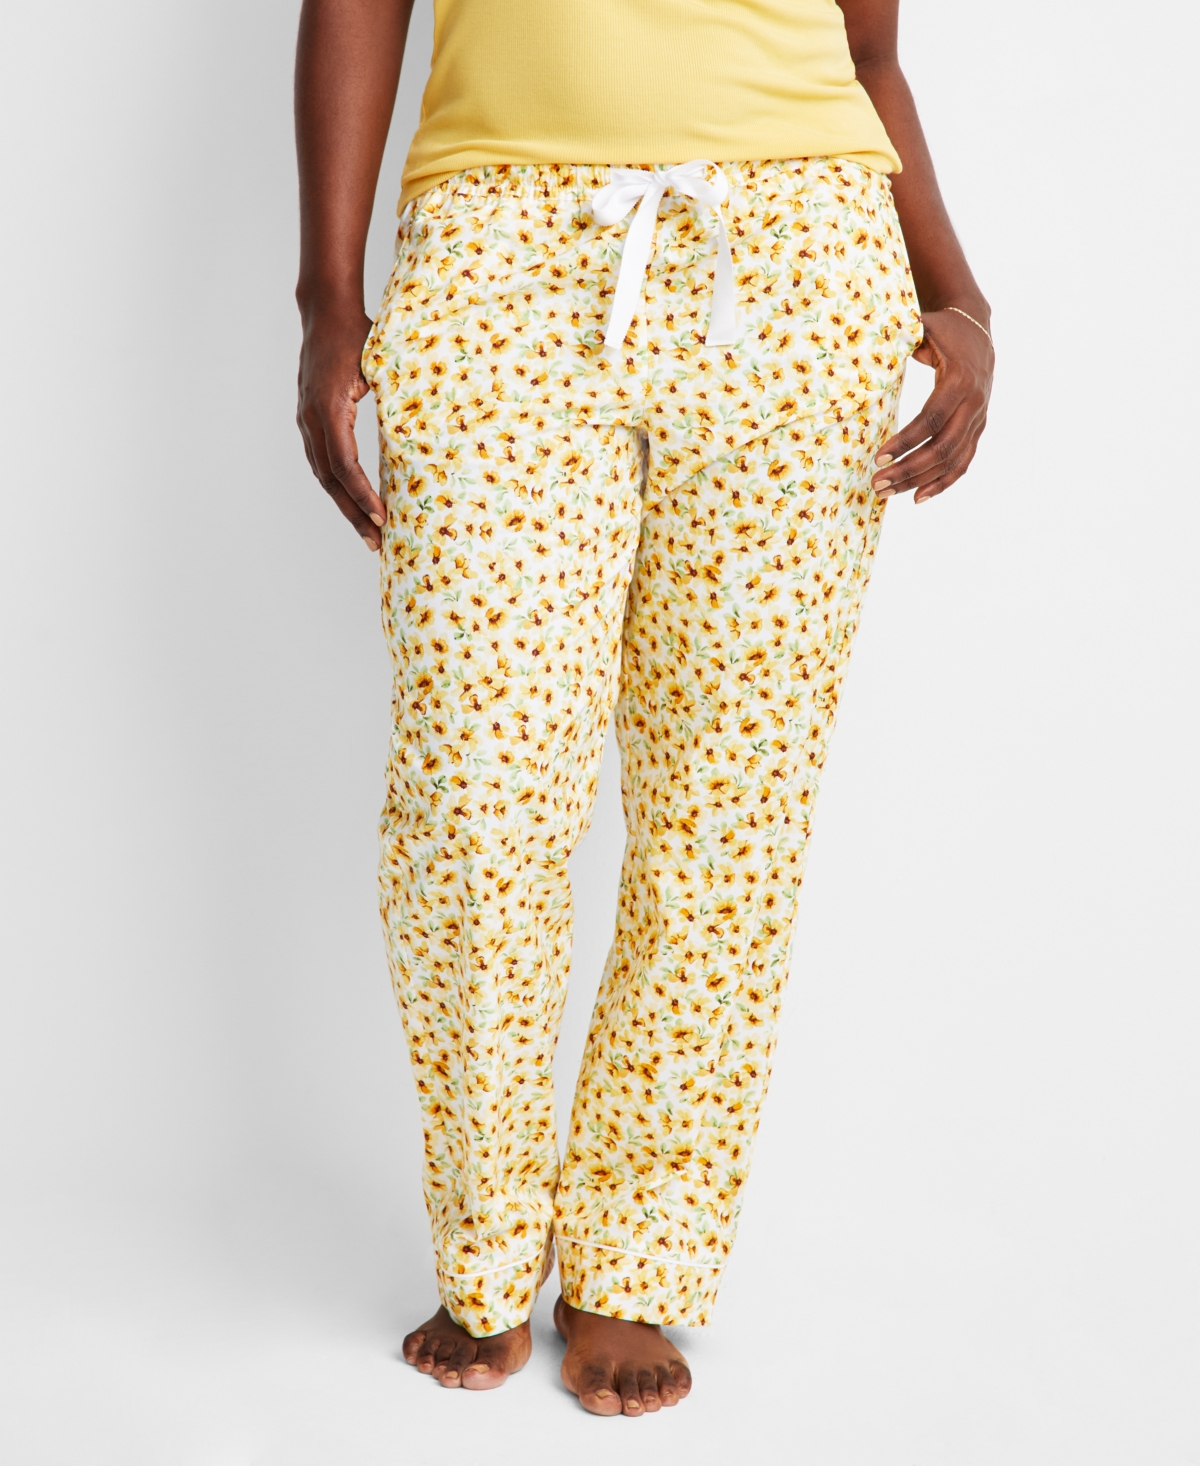 State Of Day Women's Printed Poplin Pajama Pants Xs-3x, Created For Macy's In Cornsilk